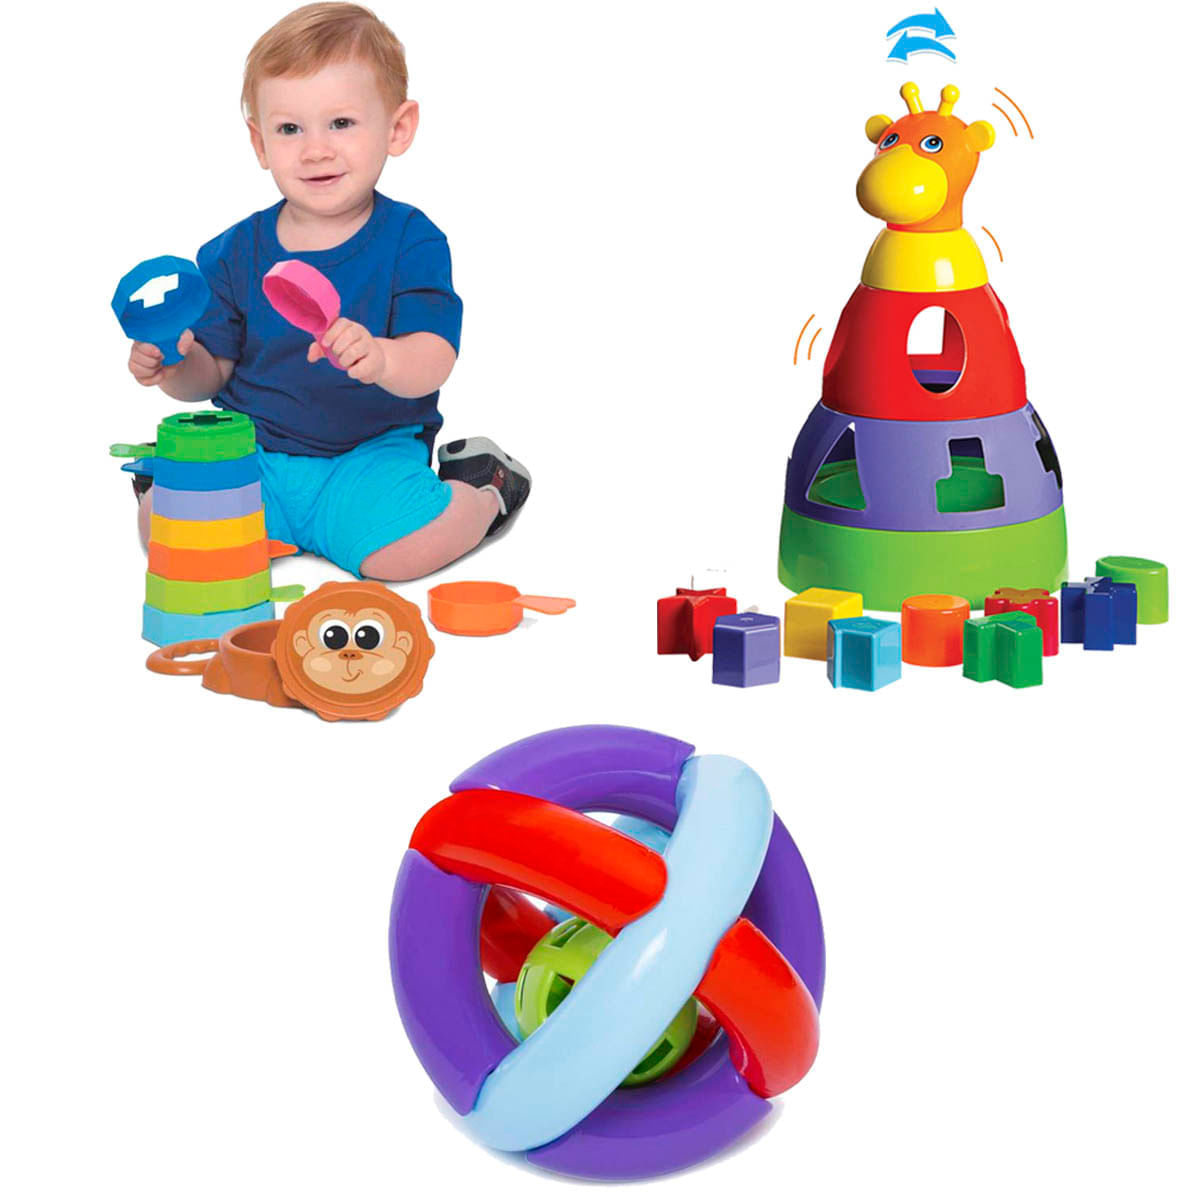 Brinquedos para Bebês 1 Ano Menino e Menina + Brinde - Ri Happy